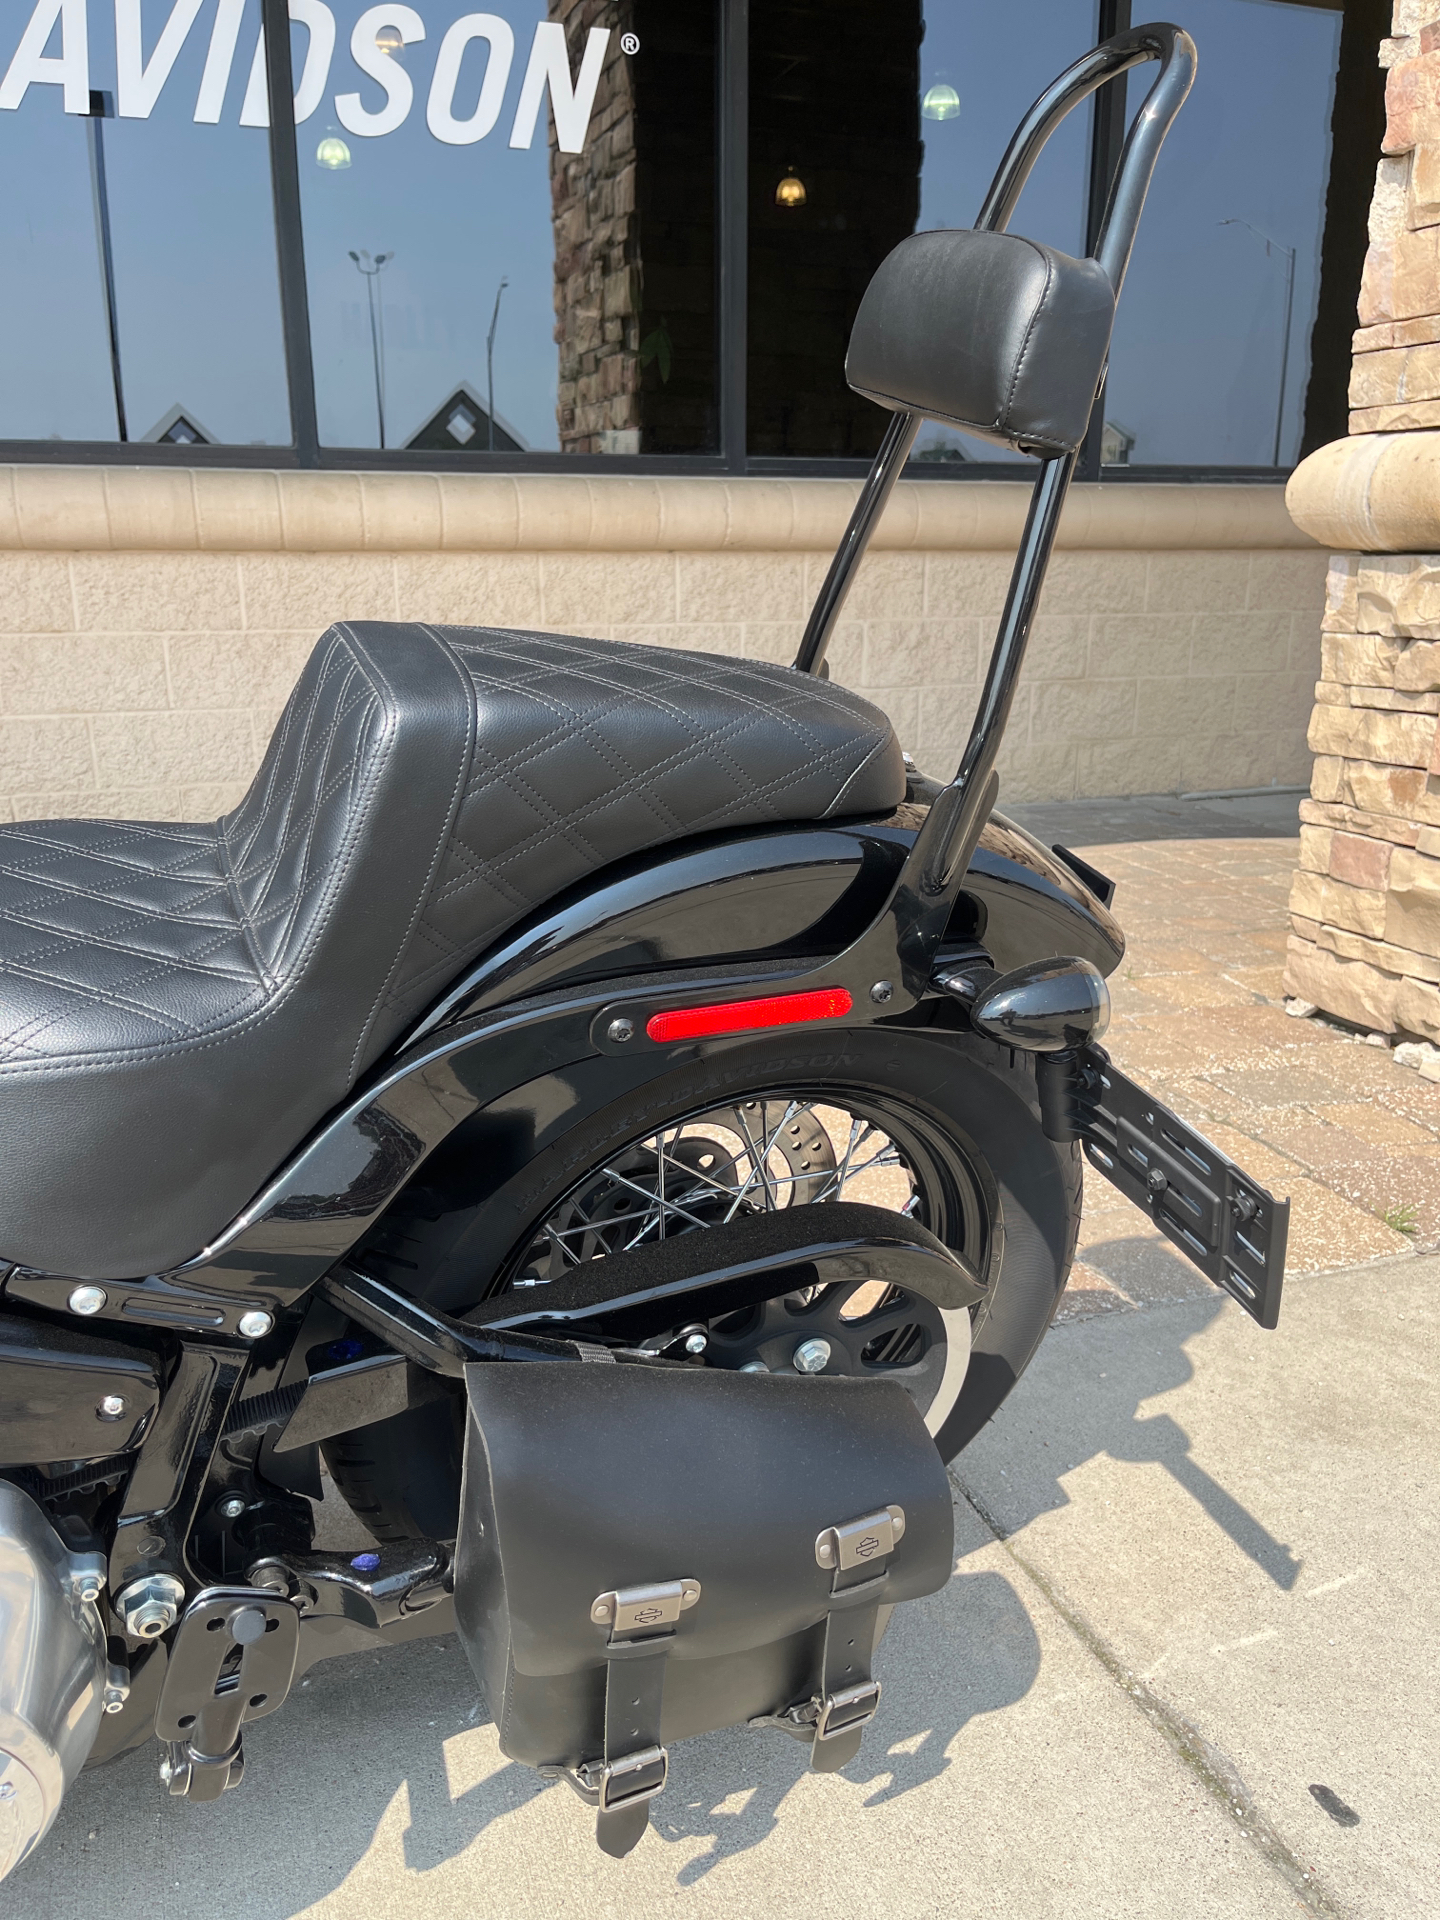 2021 Harley-Davidson Softail Slim® in Omaha, Nebraska - Photo 7